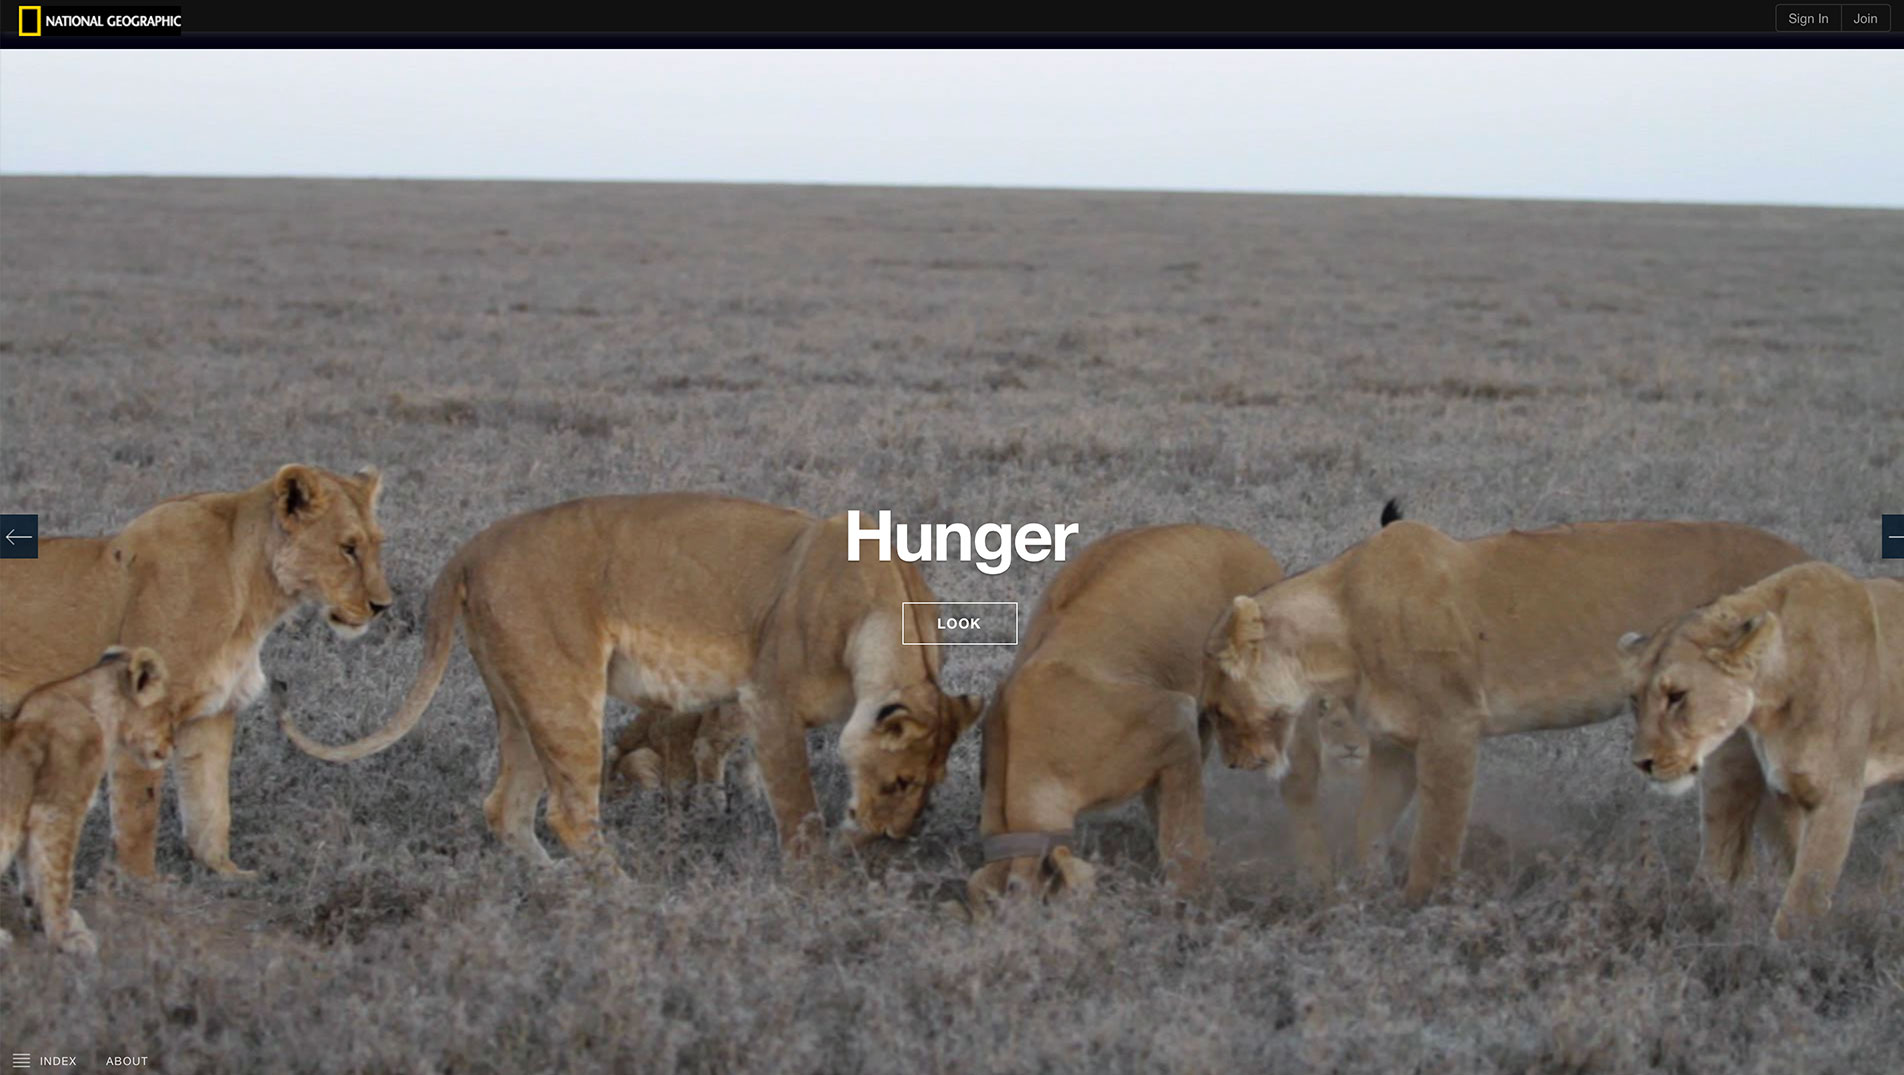 Serengeti Lion